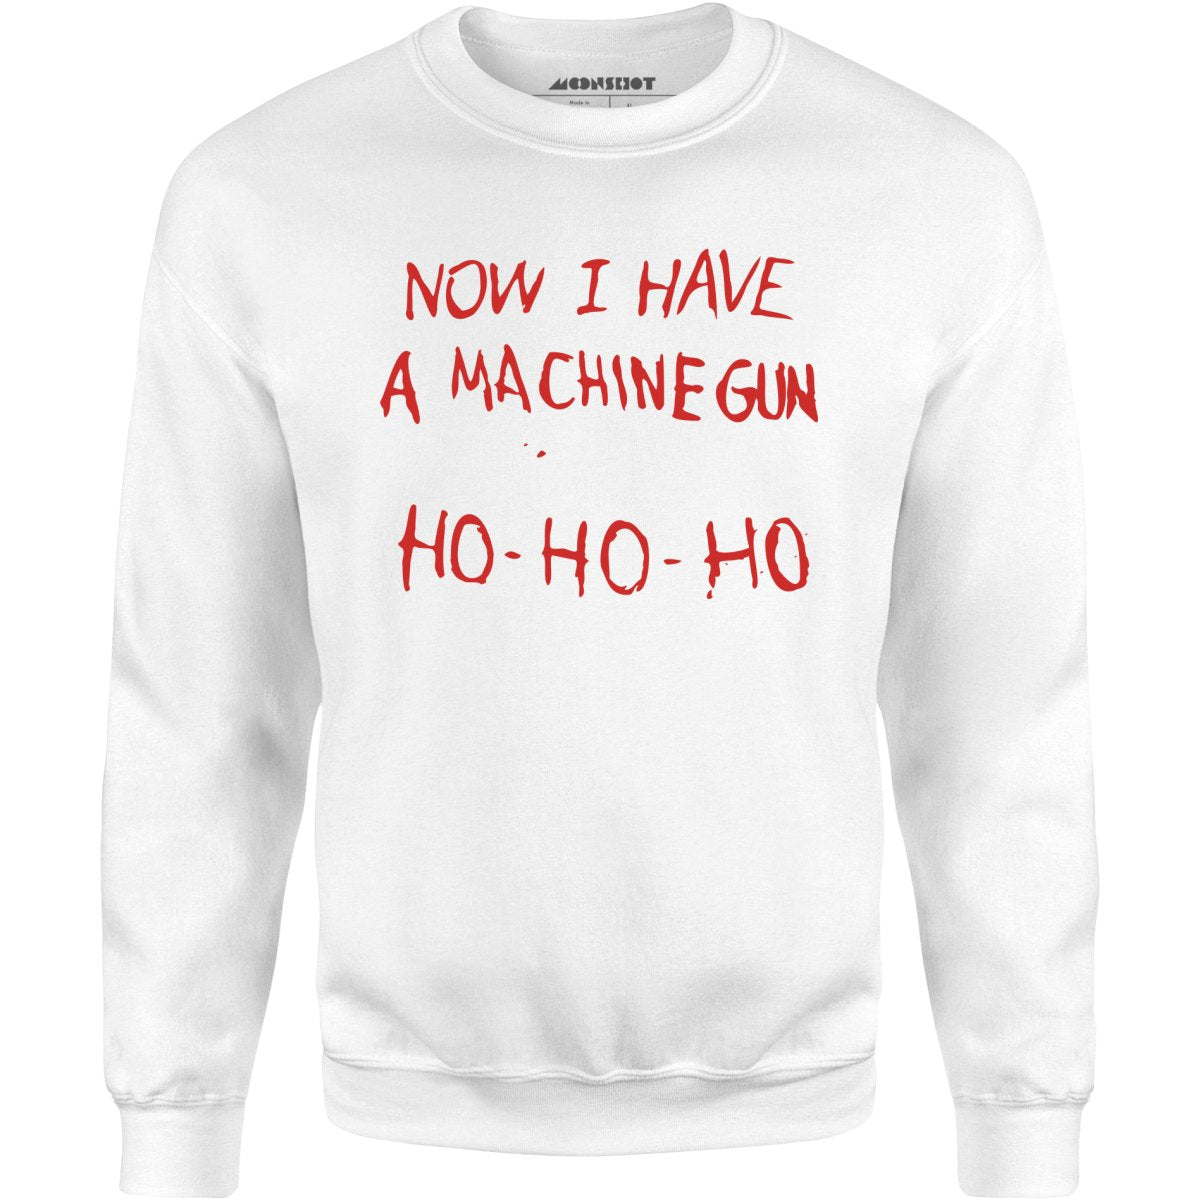 Now I Have a Machine Gun Ho-Ho-Ho - Unisex Sweatshirt